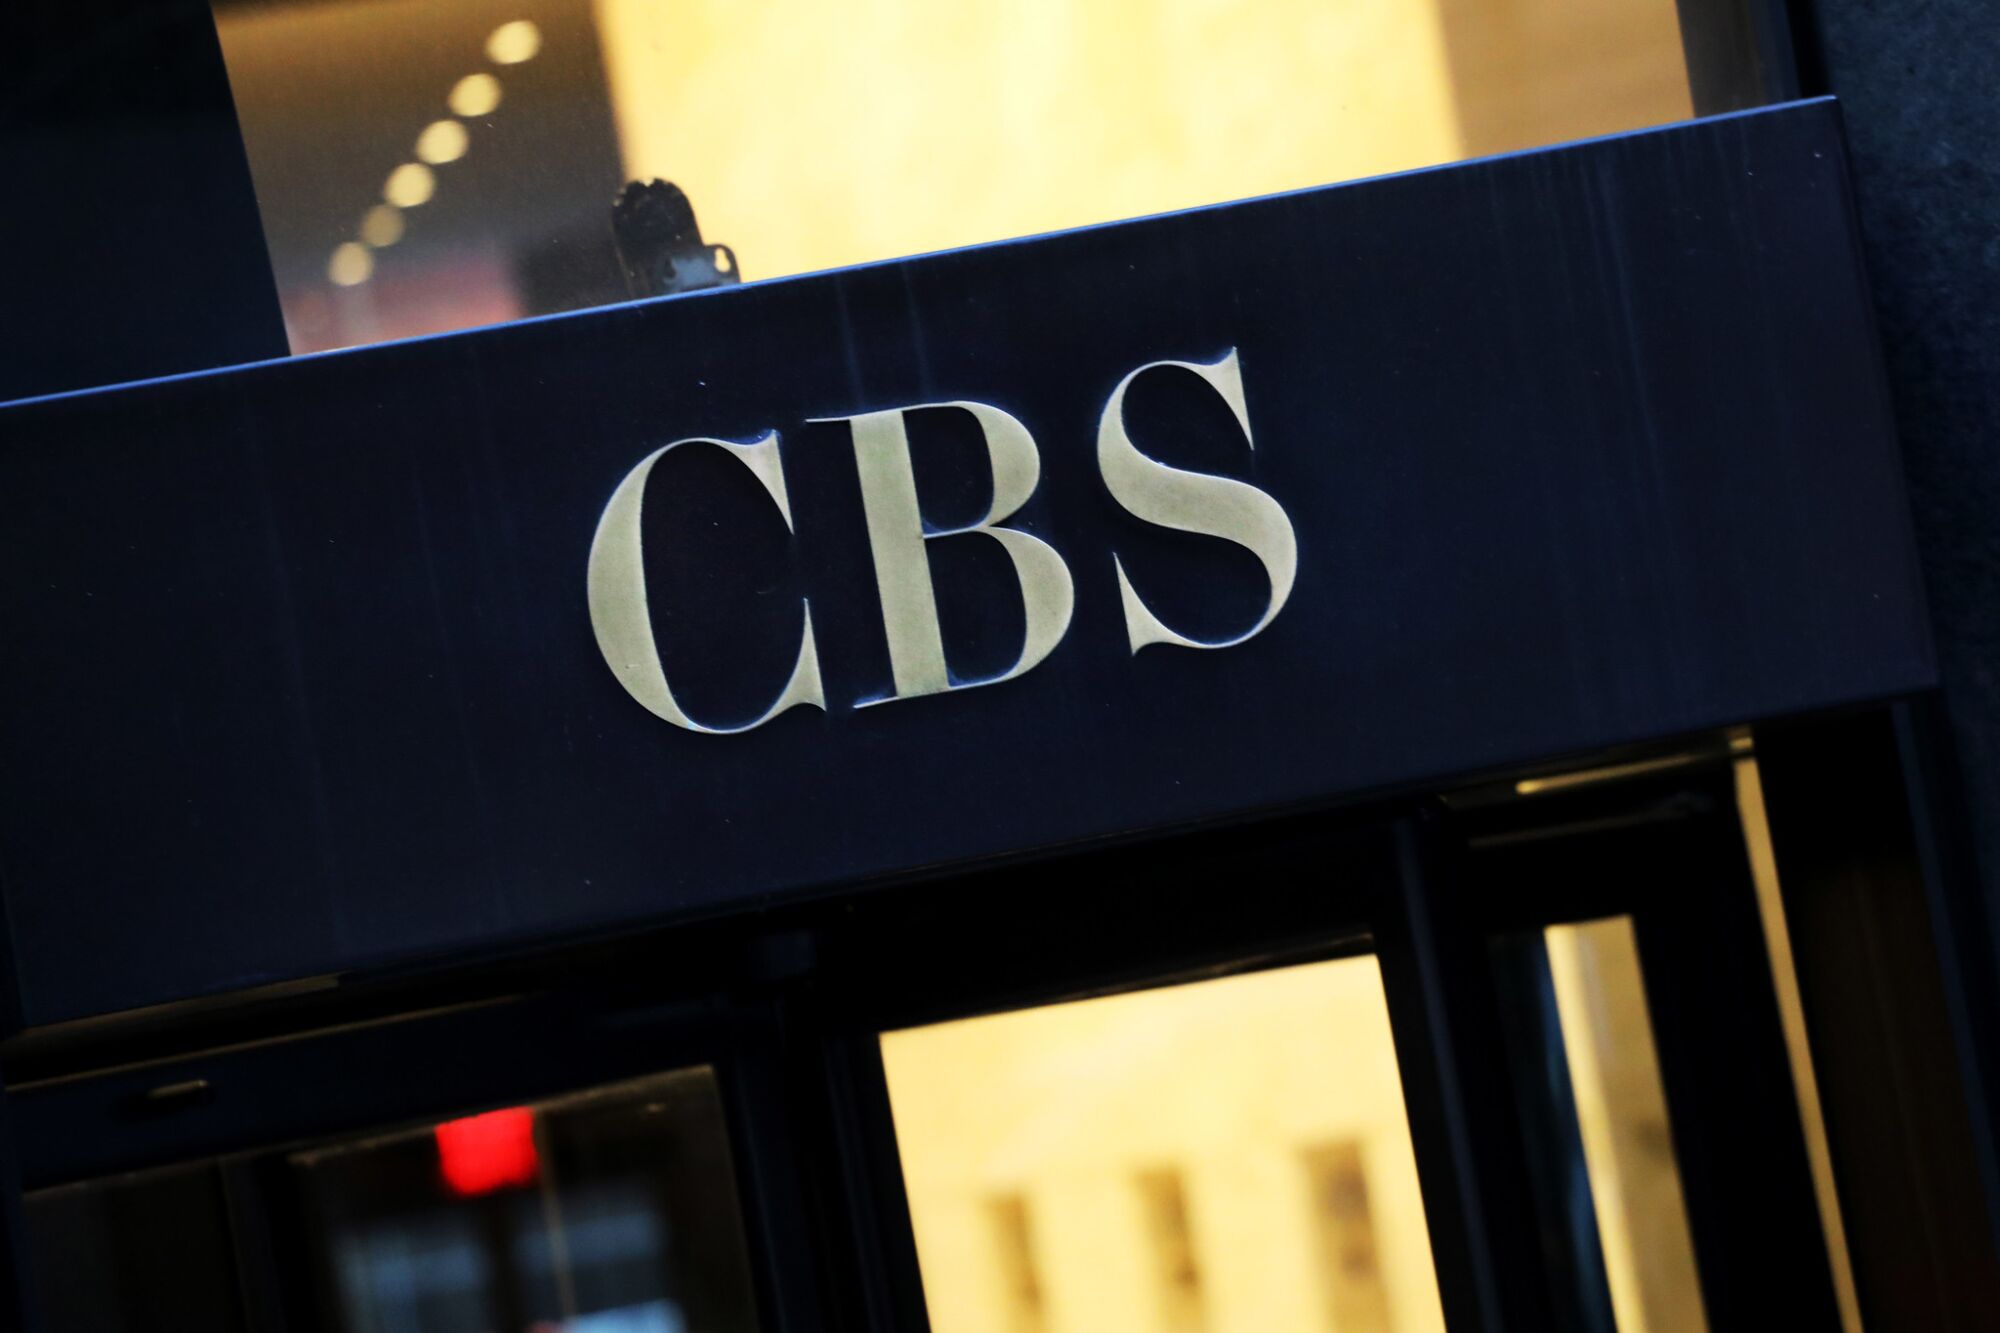 CBS headquarters in New York